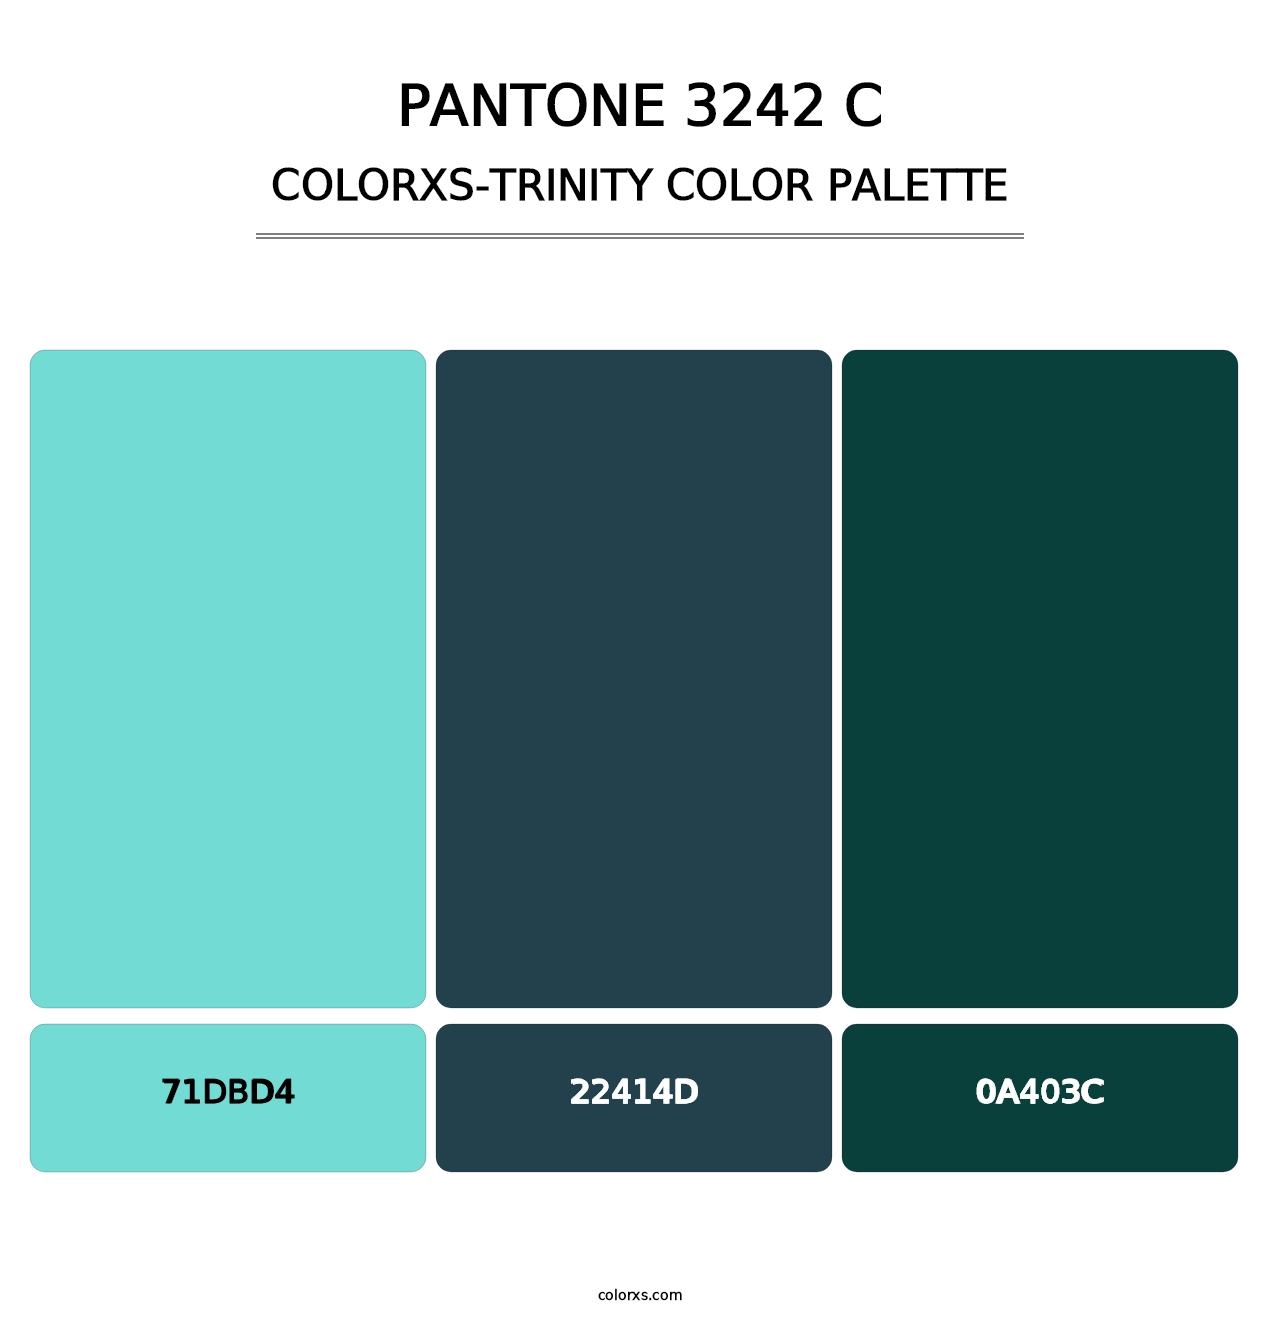 PANTONE 3242 C - Colorxs Trinity Palette